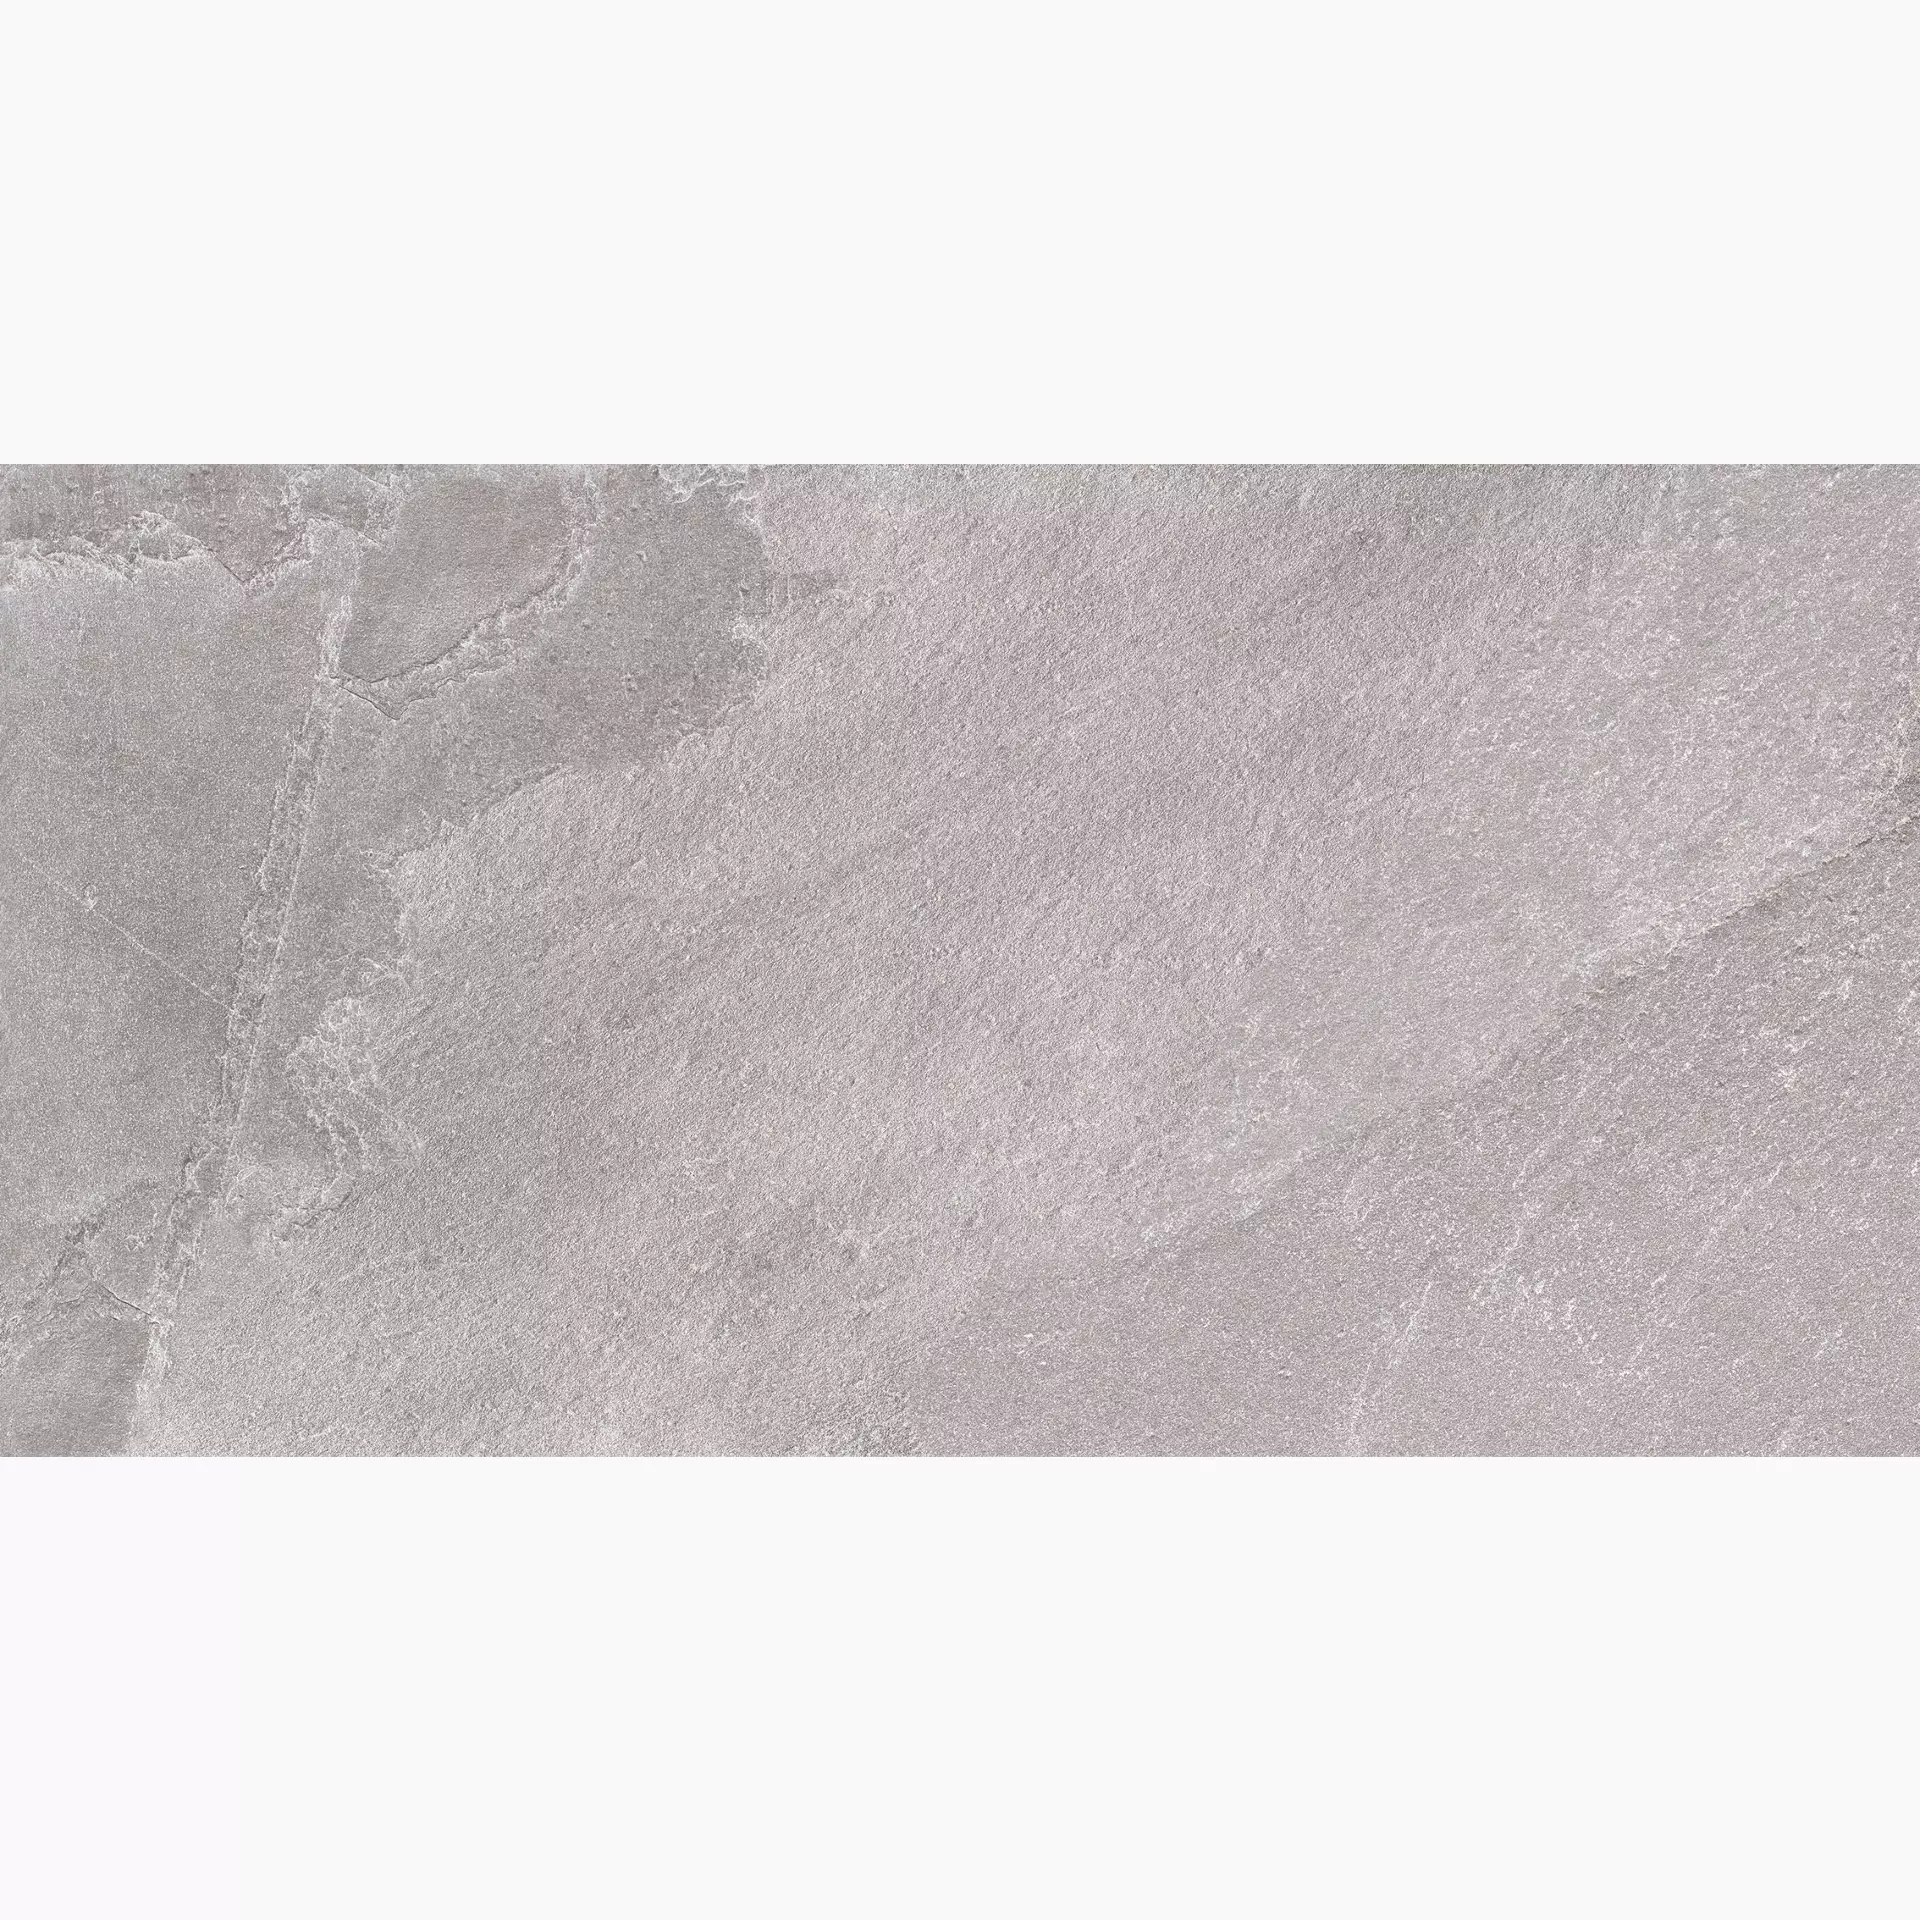 Florim Natural Stone Of Cerim Fossil Naturale – Matt 752007 60x120cm rectified 9mm